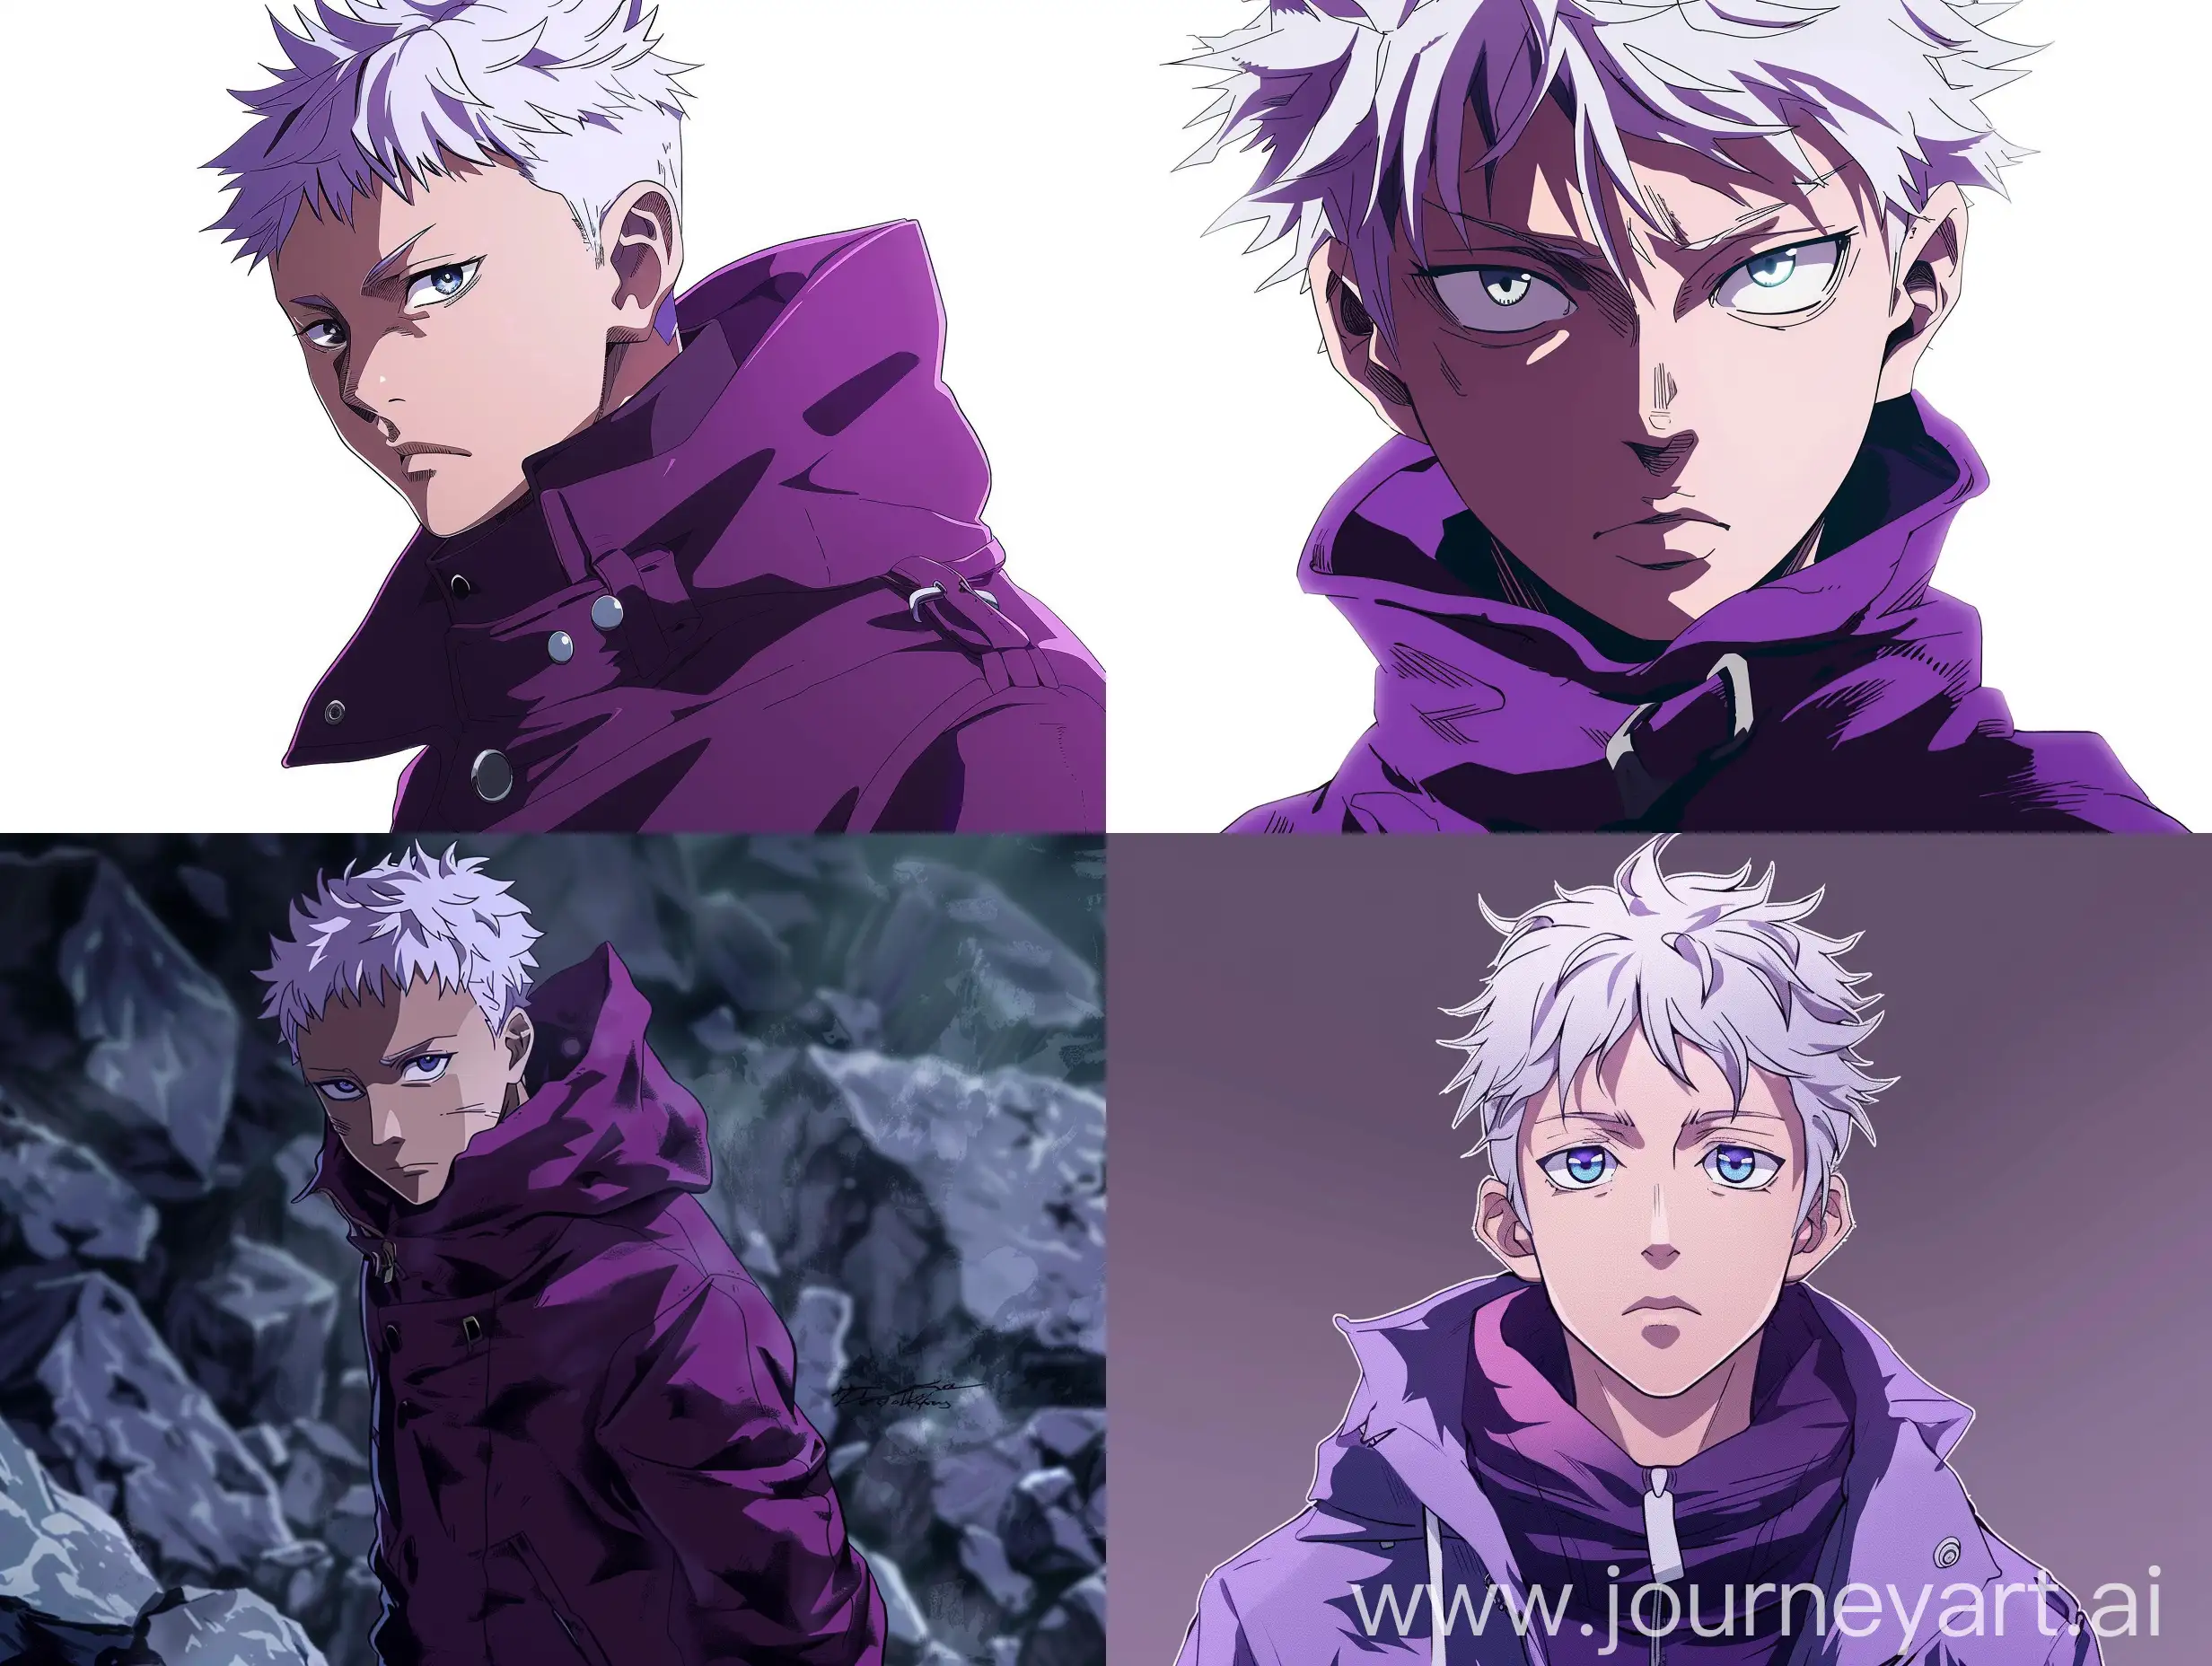 Teenage-Boy-in-Jujutsu-Kaisen-Anime-Style-Wearing-Purple-Coat